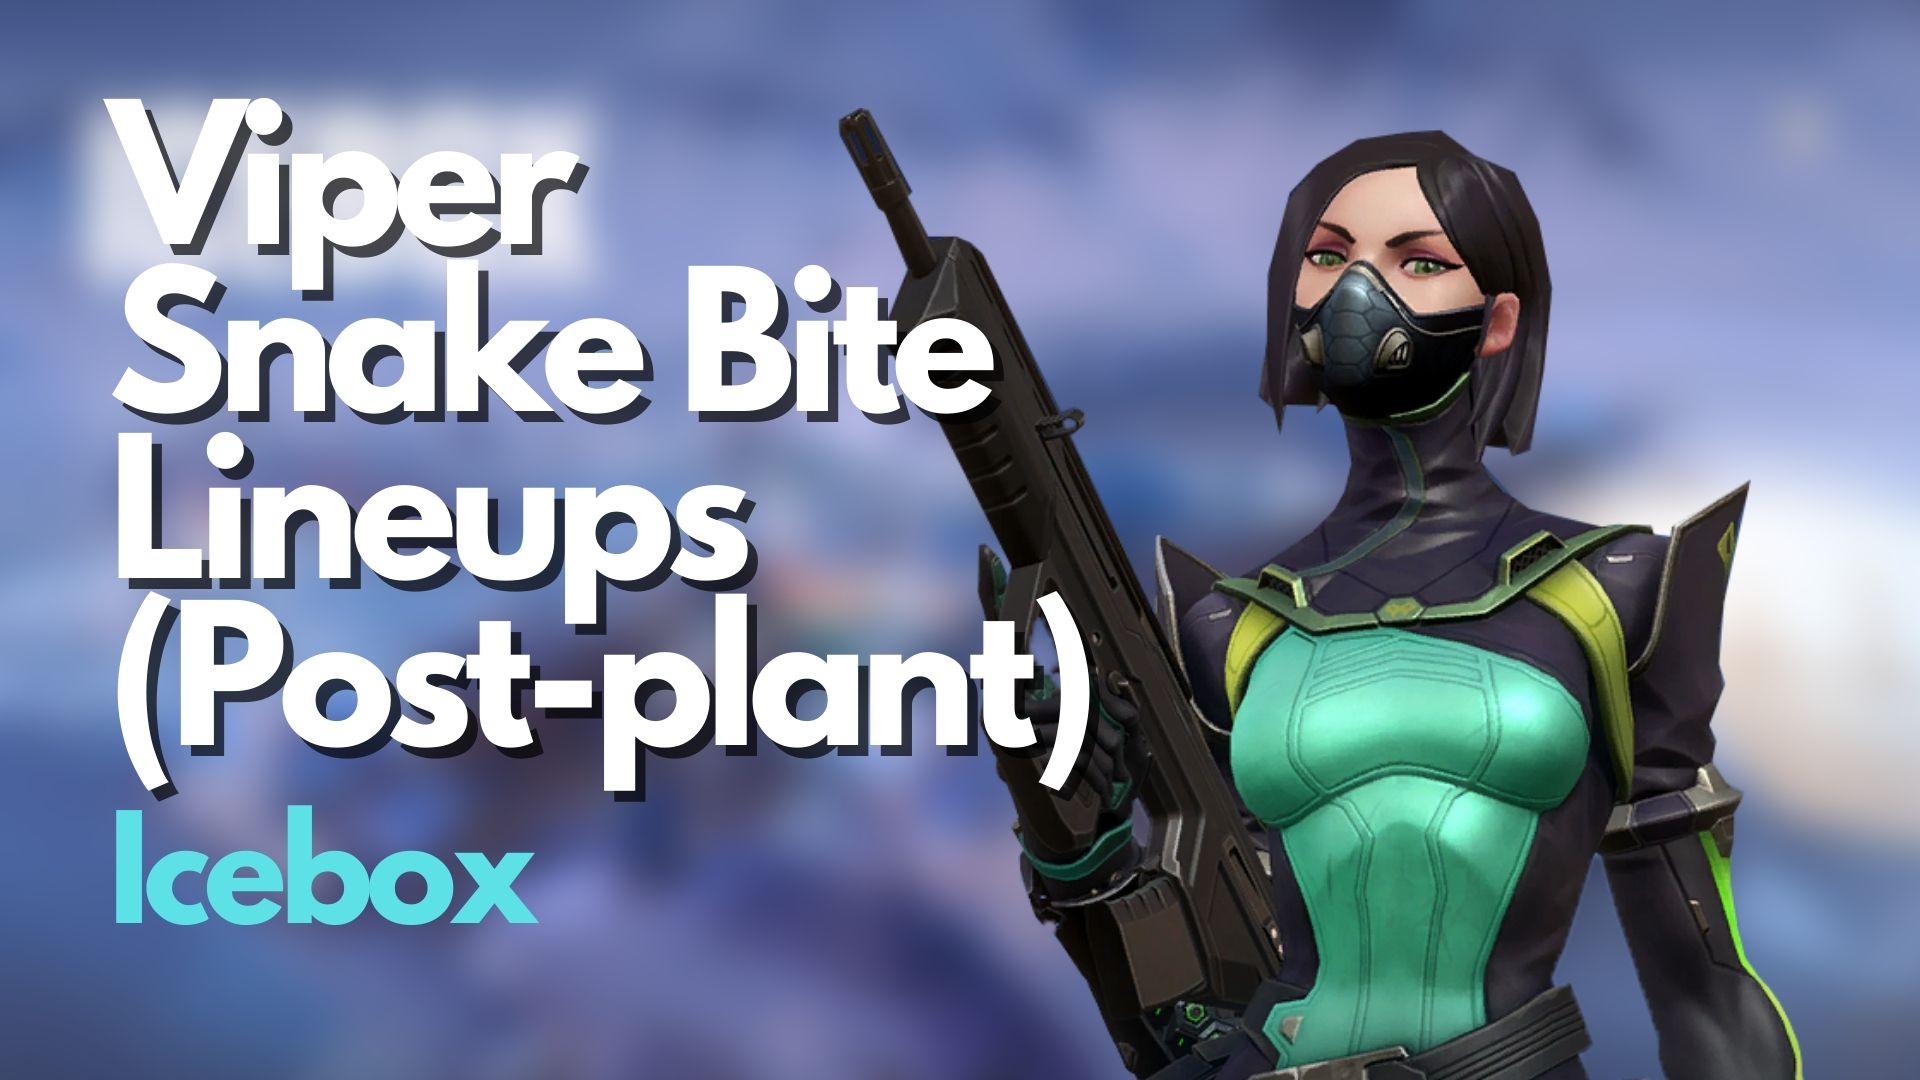 VALORANT: Viper Snake Bite Lineups on Icebox (Post-plant)